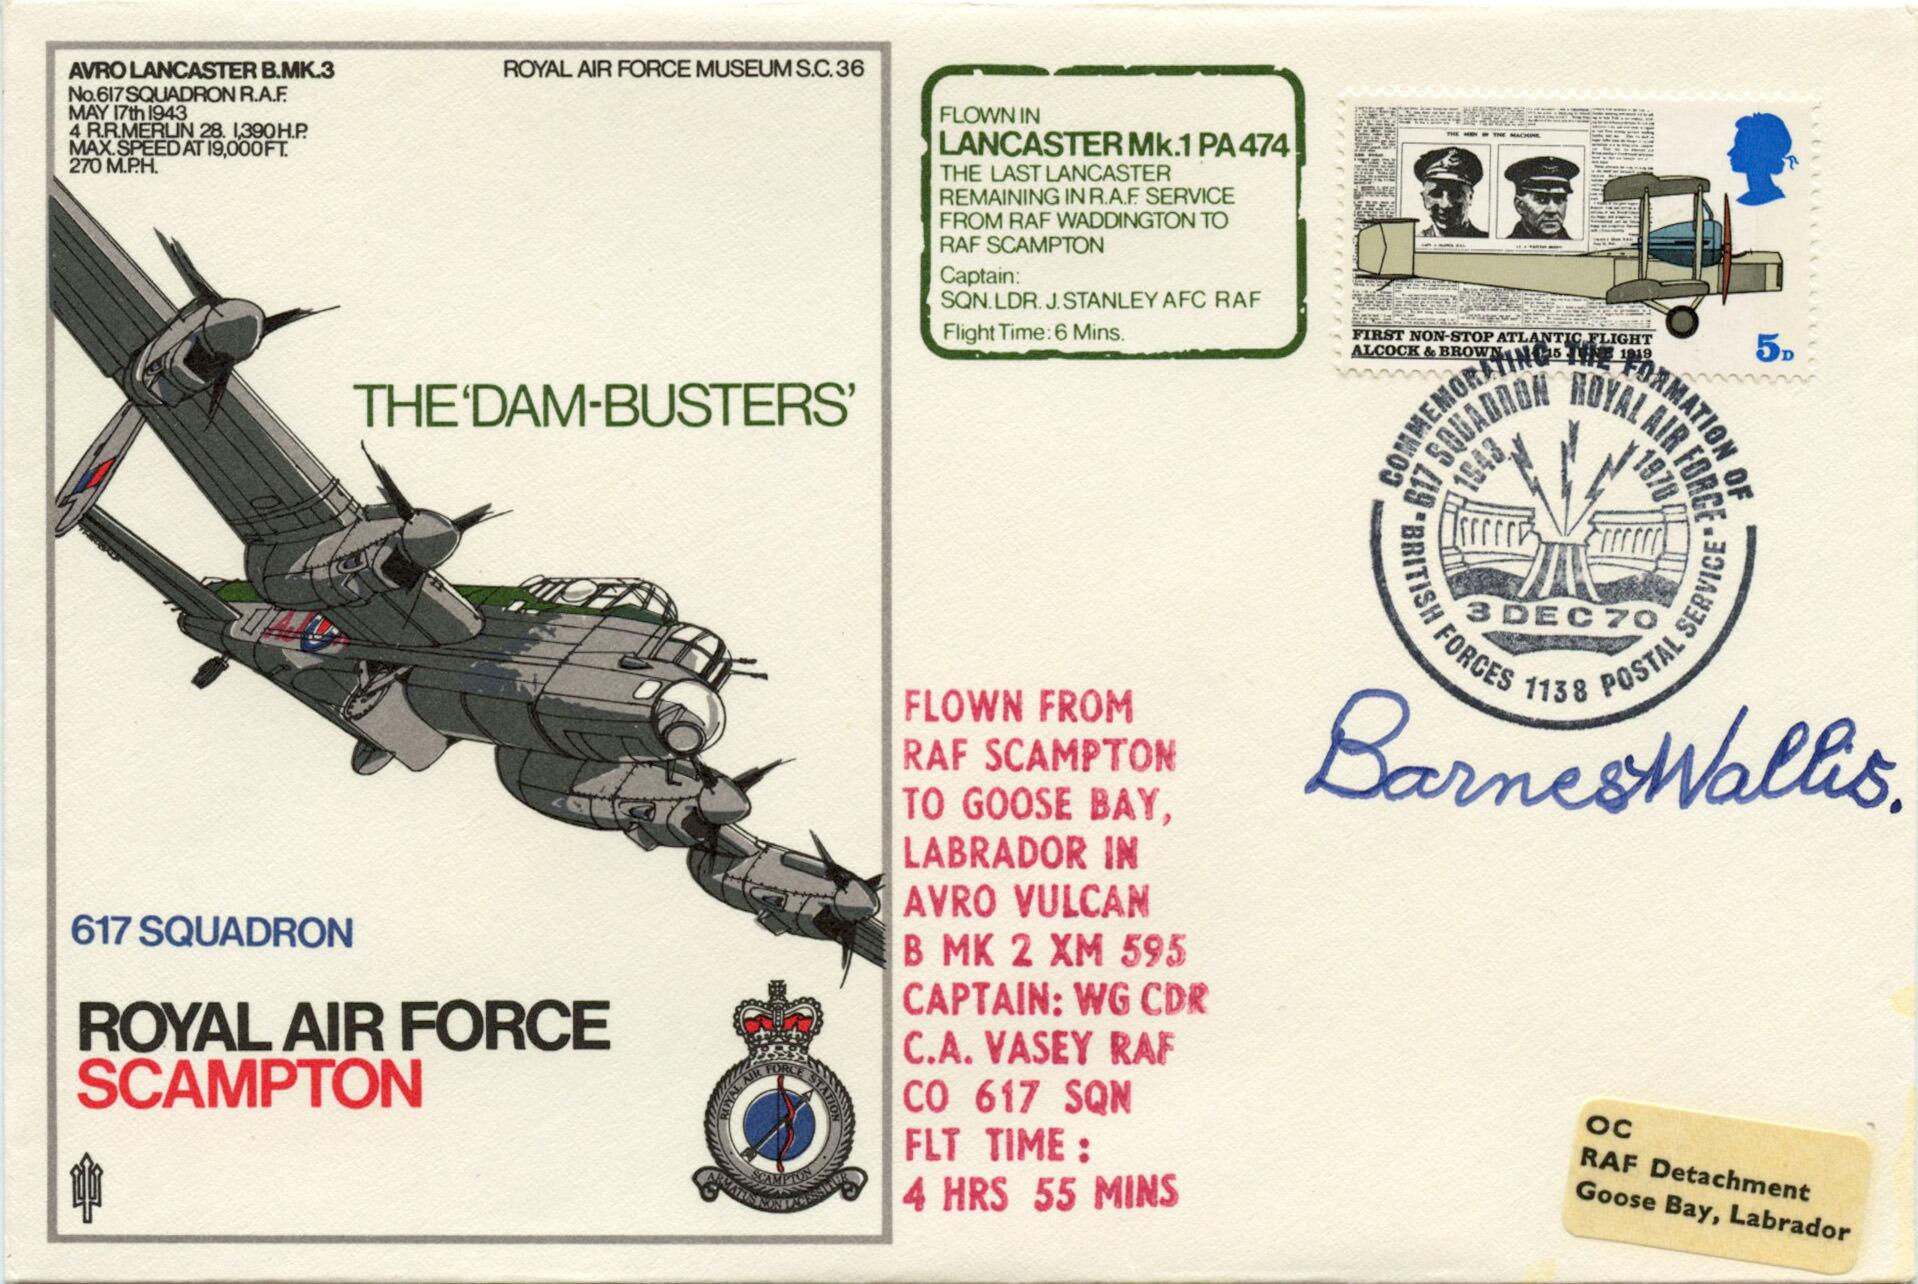 Barnes Wallis signed 1970 Dambusters cover